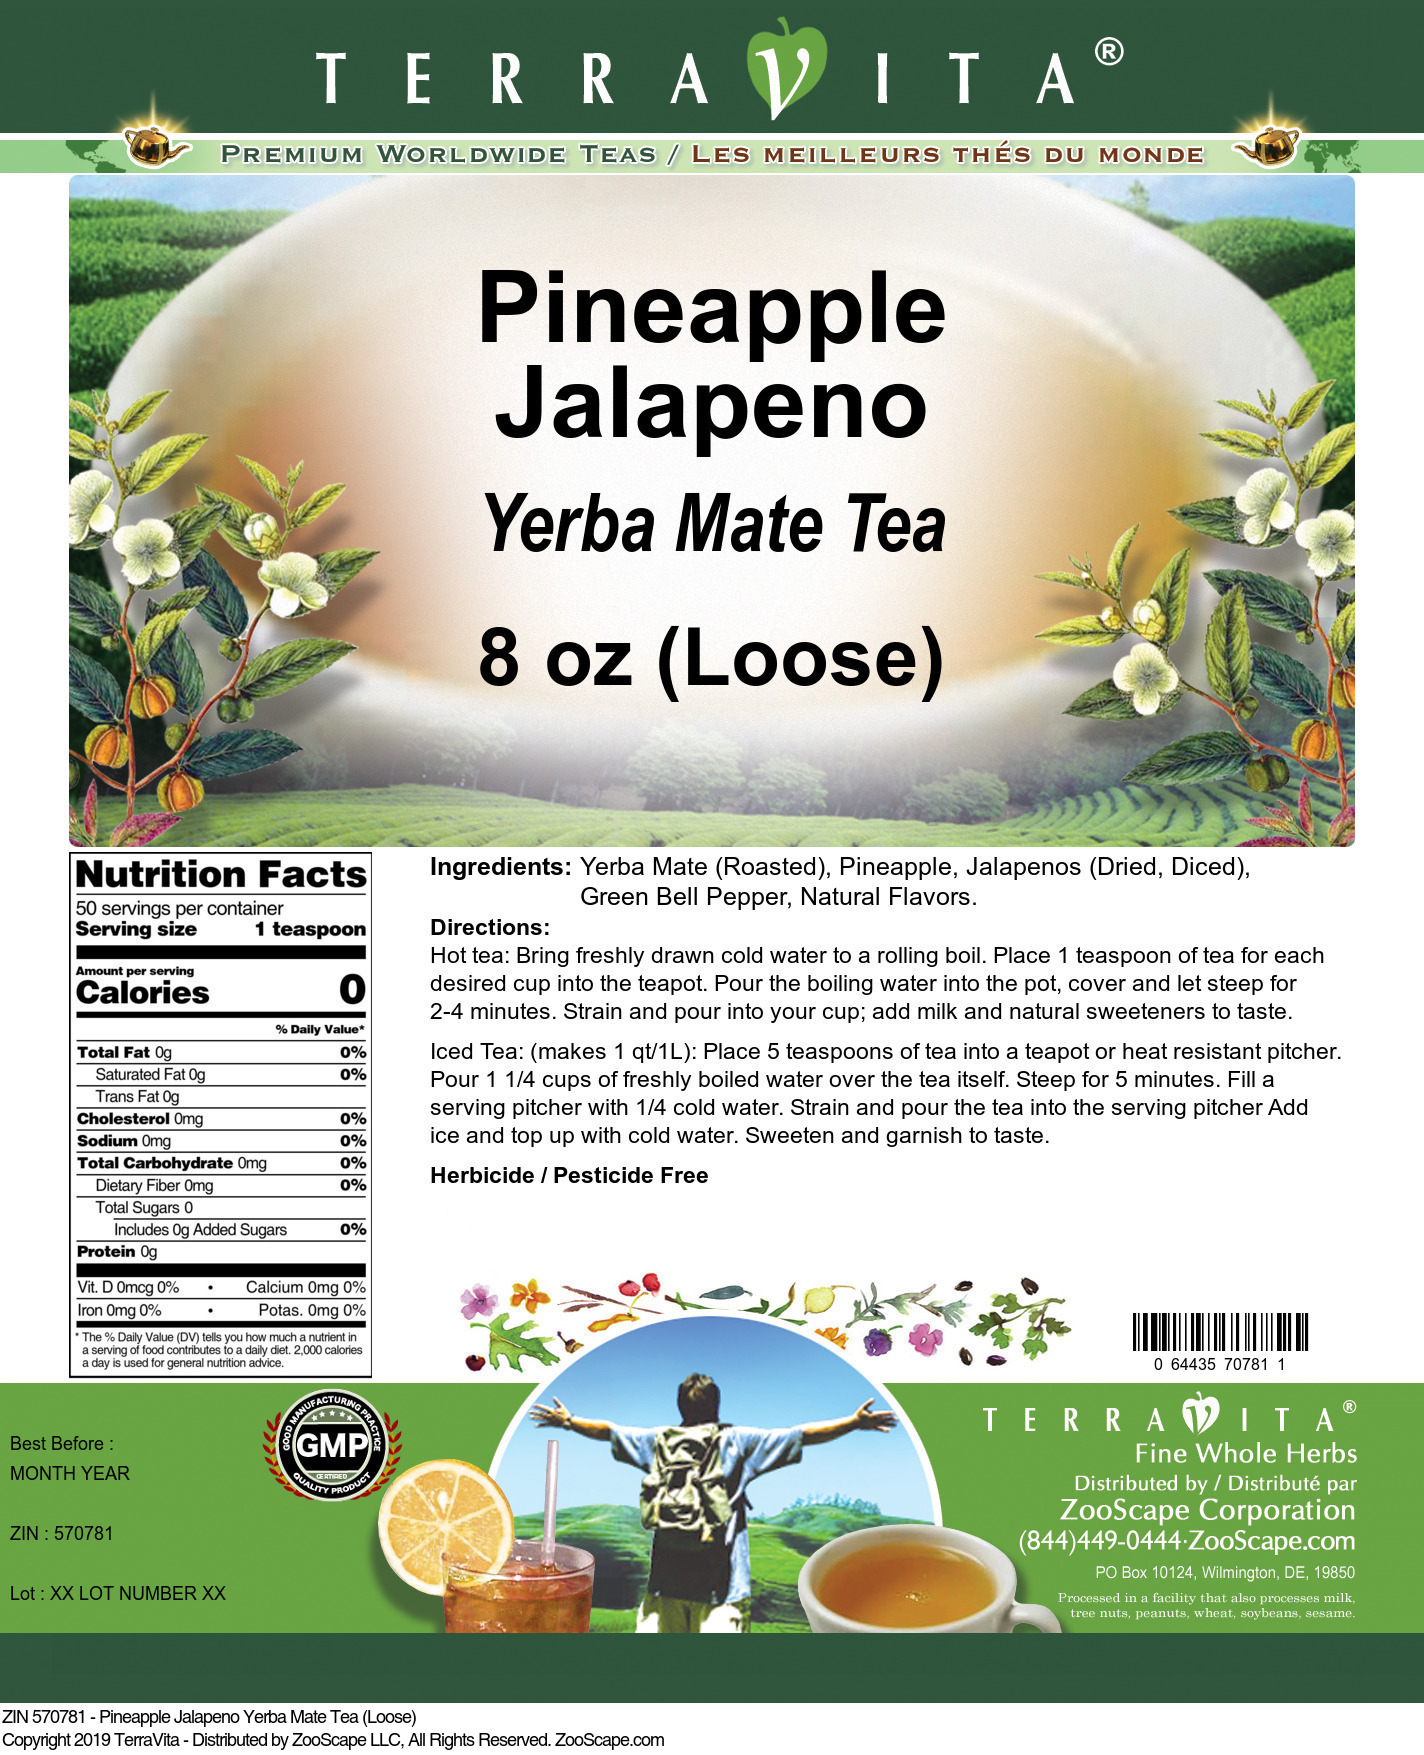 Pineapple Jalapeno Yerba Mate Tea (Loose) - Label